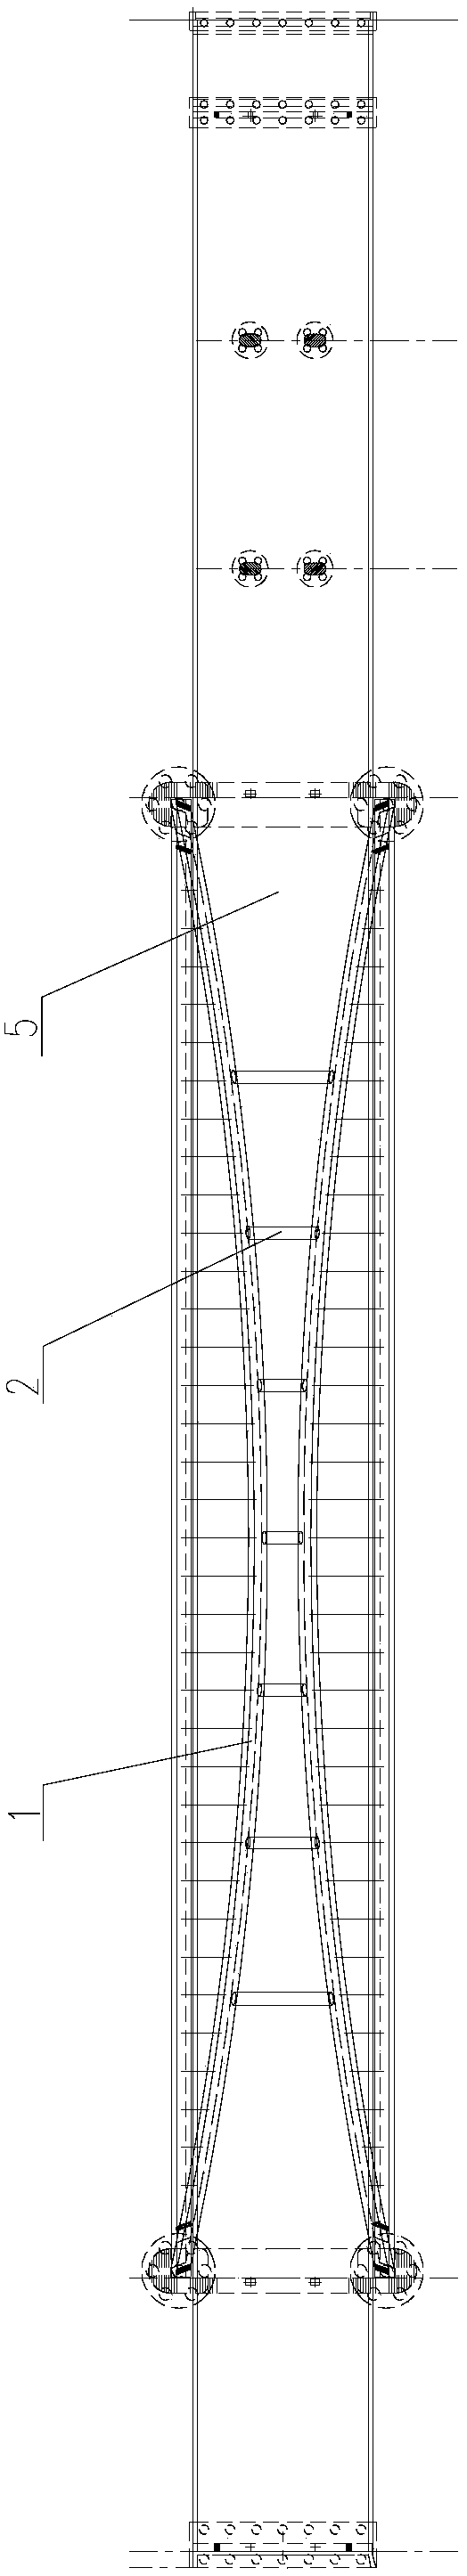 Constructing method of through steel box arch bridge